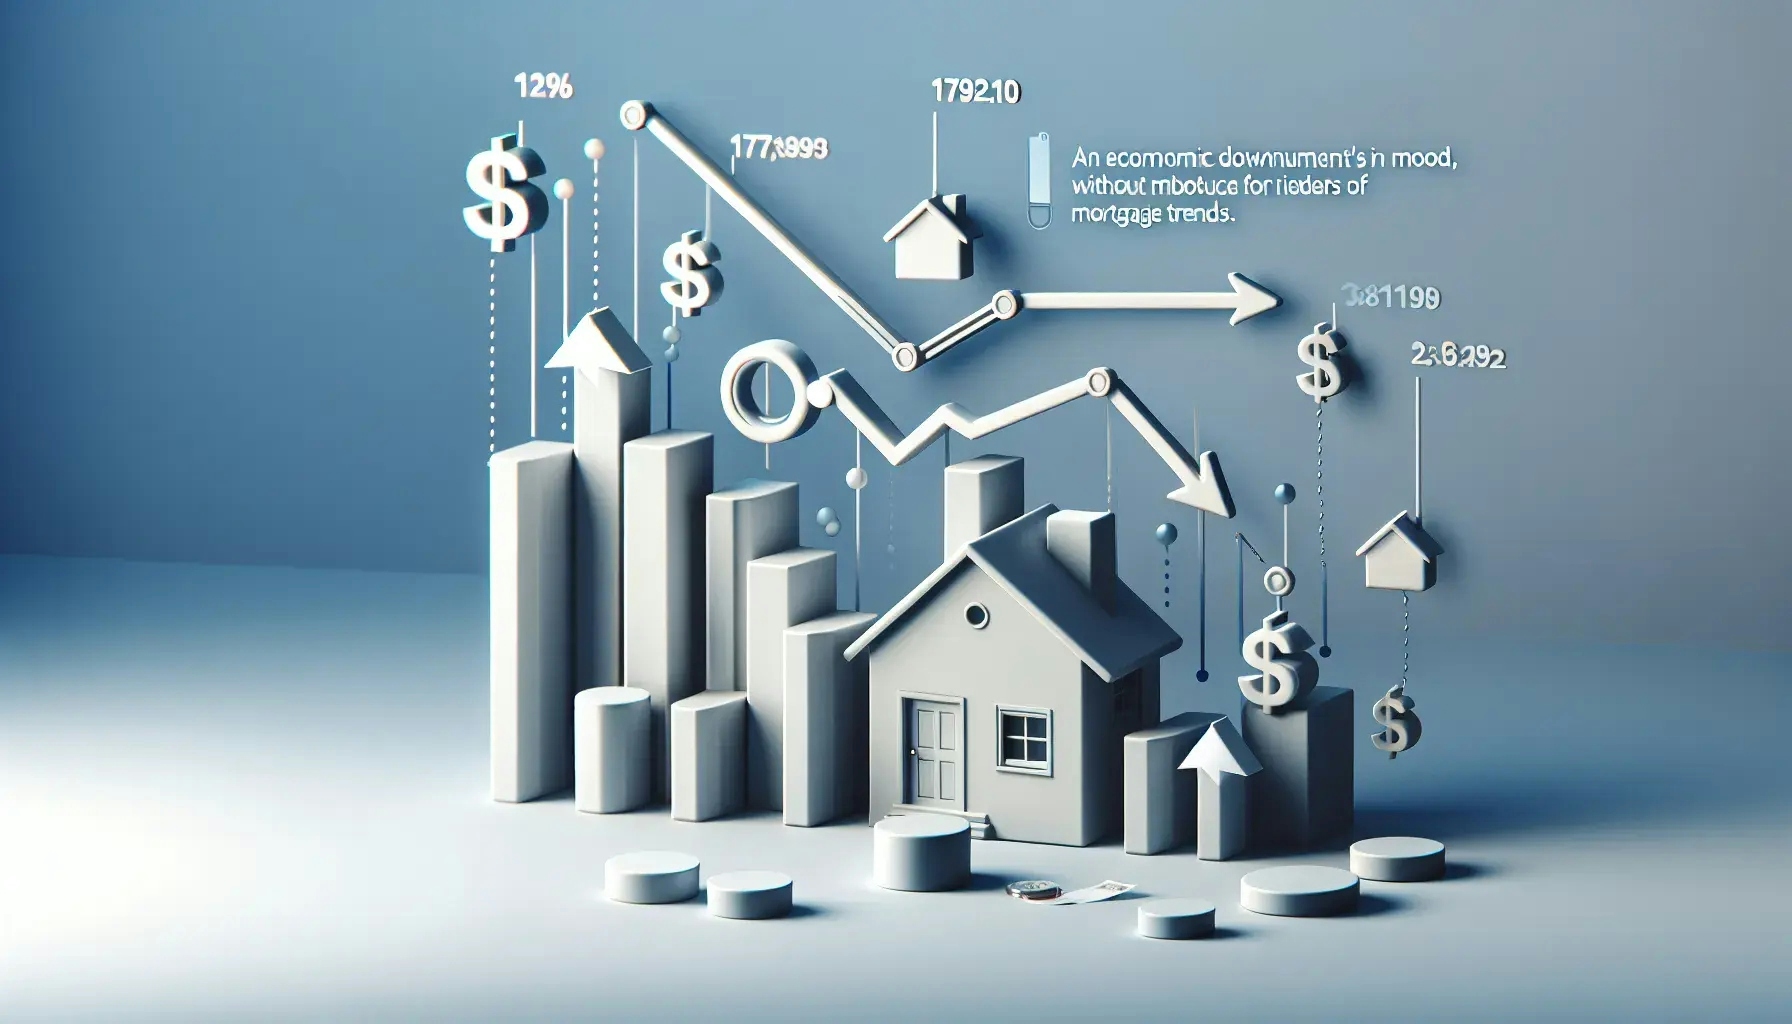 how economic downturns impact mortgage trends